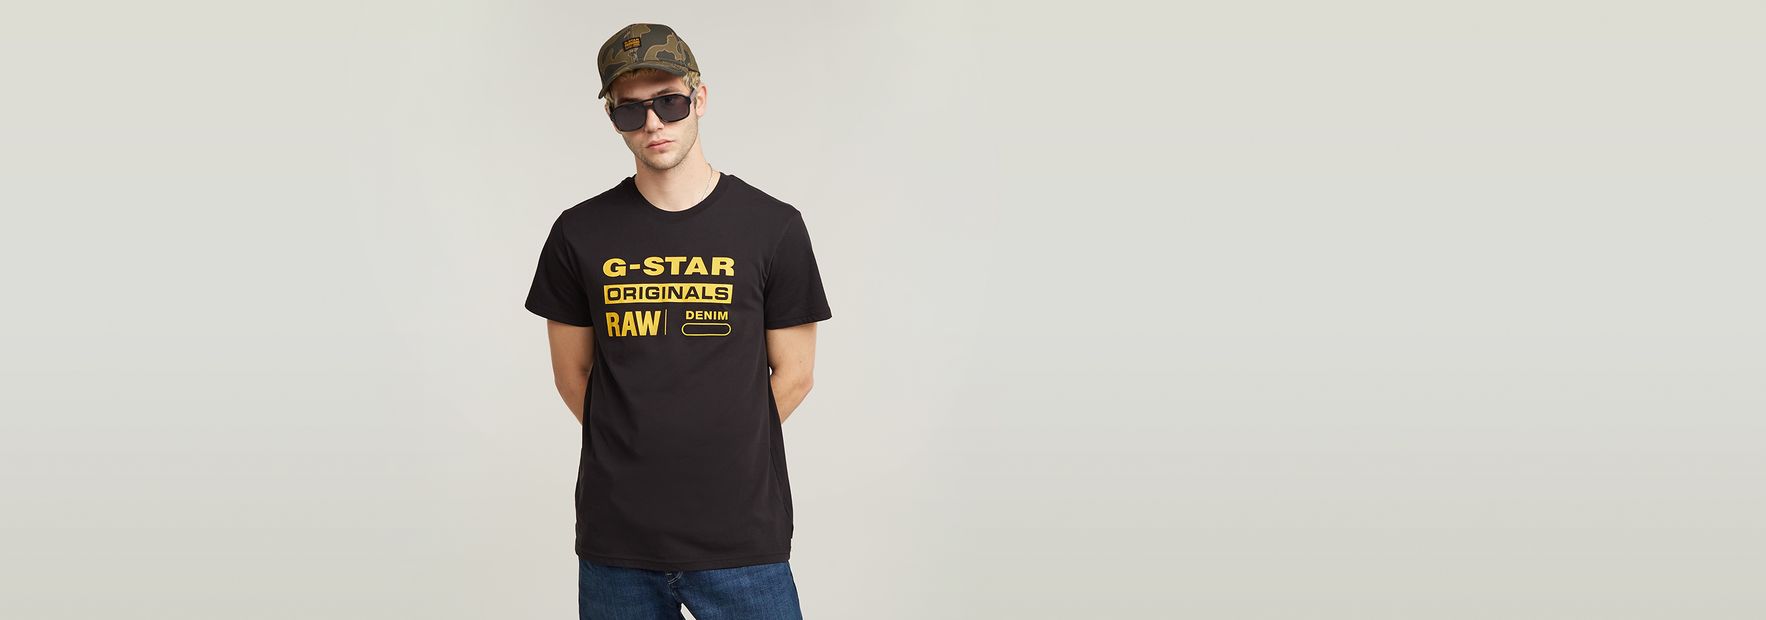 Camiseta G-Star Originales - Graphic 13 Hombre Blancos Kaki